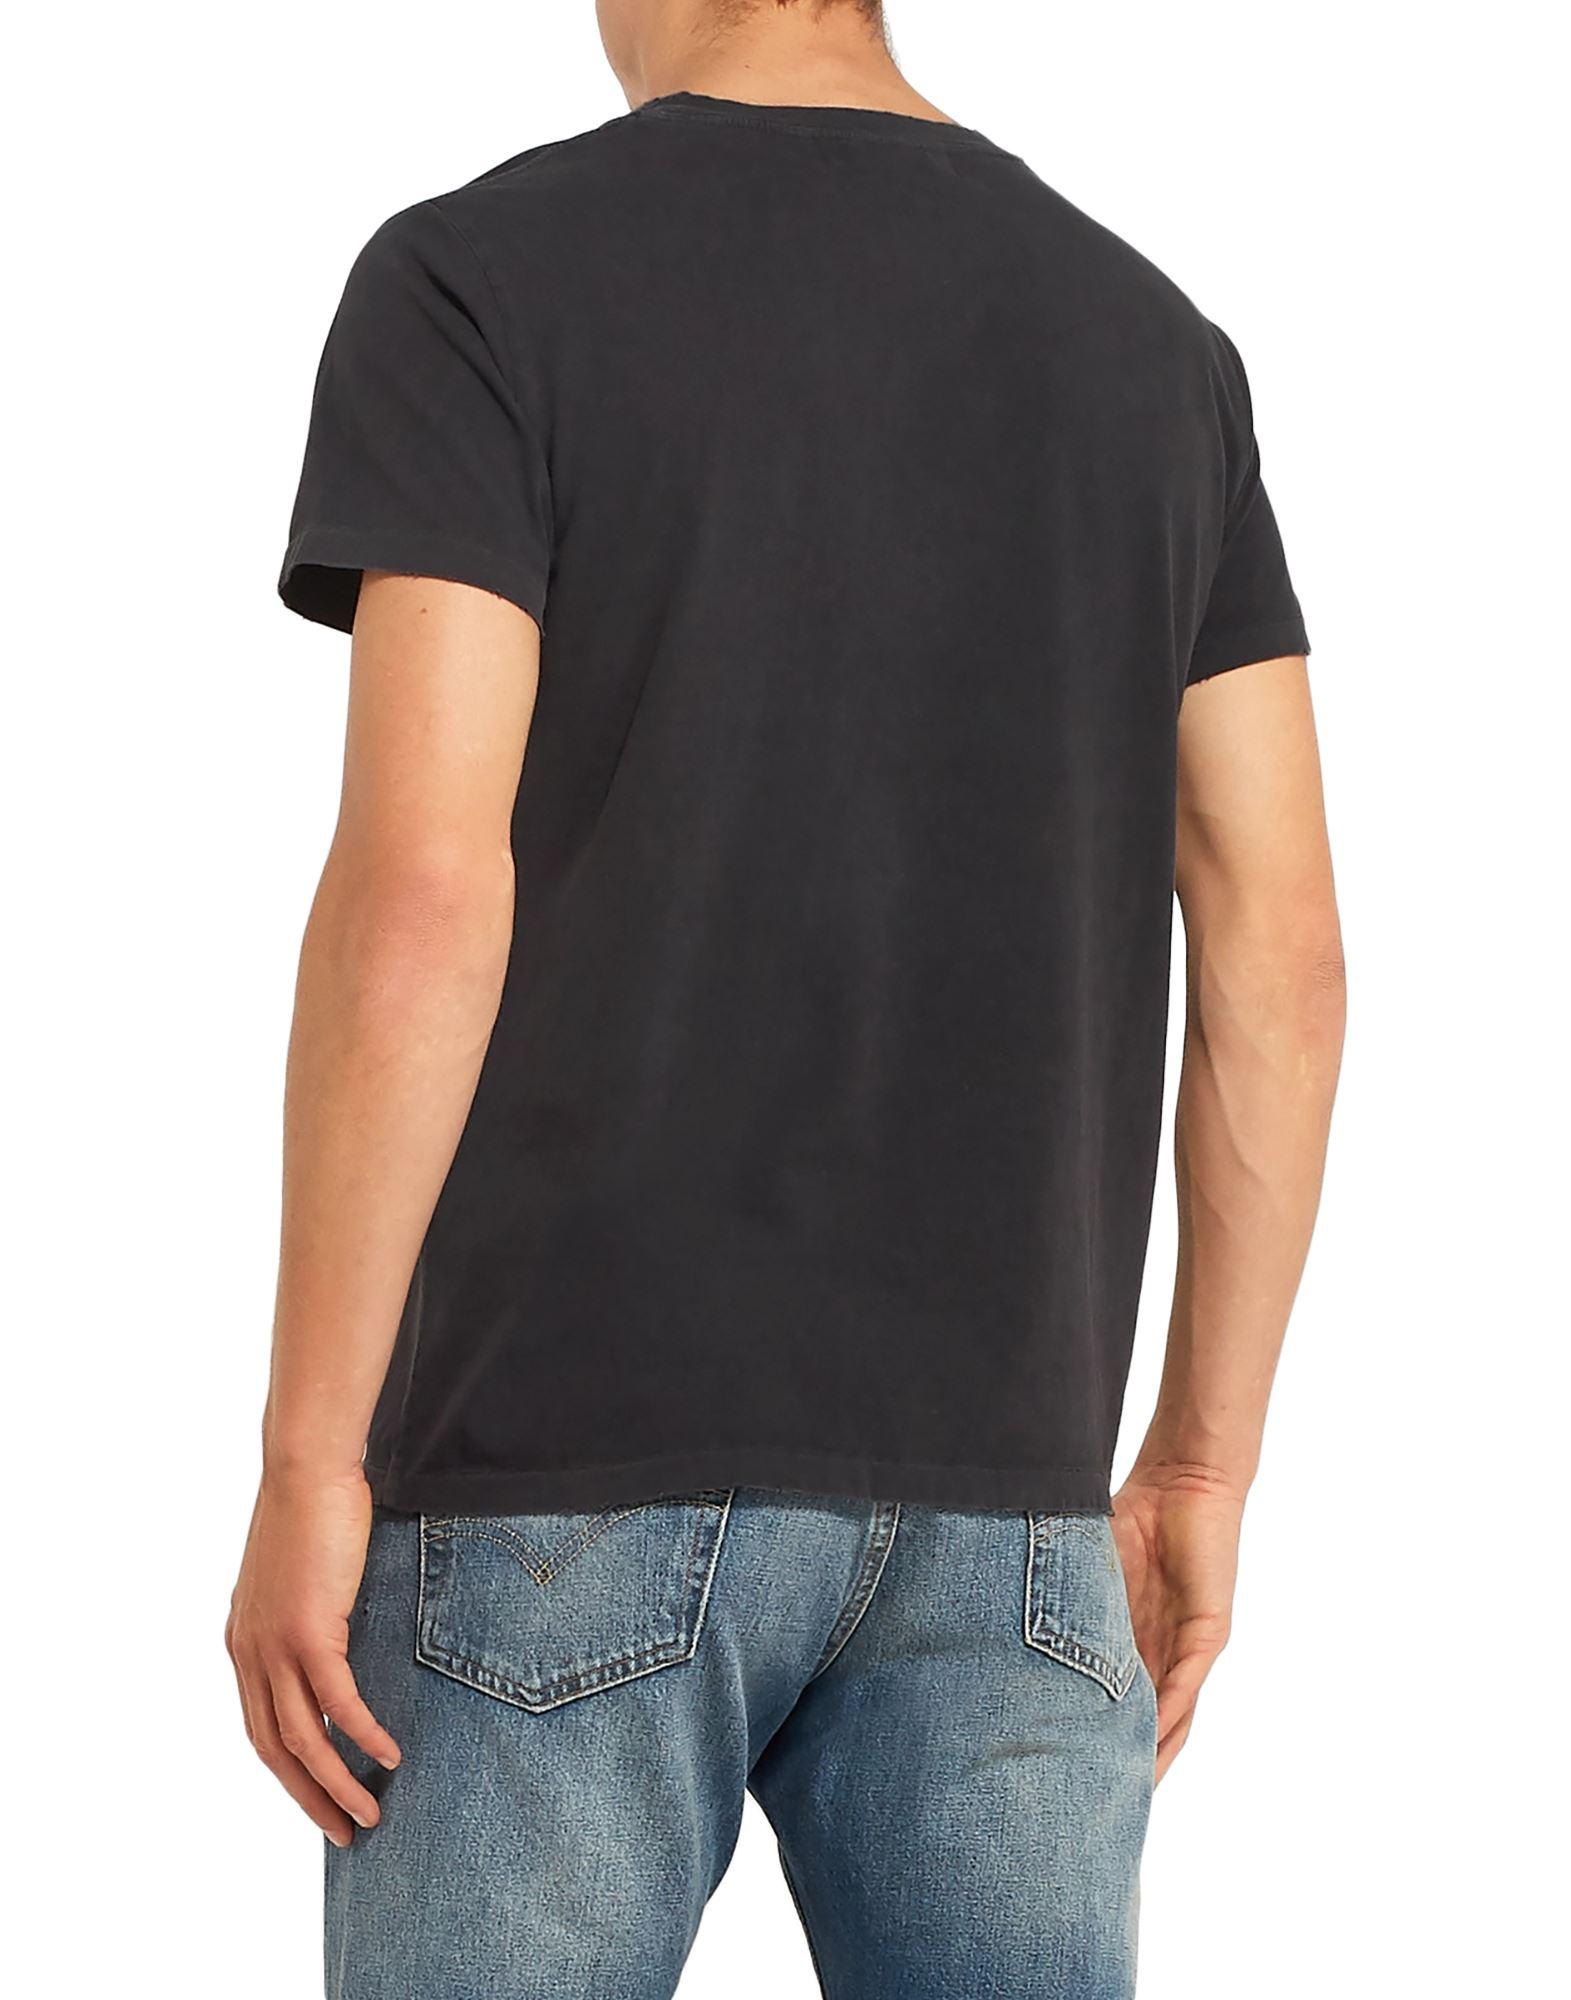 Remi Relief T-shirt in Steel Grey (Black) for Men - Lyst